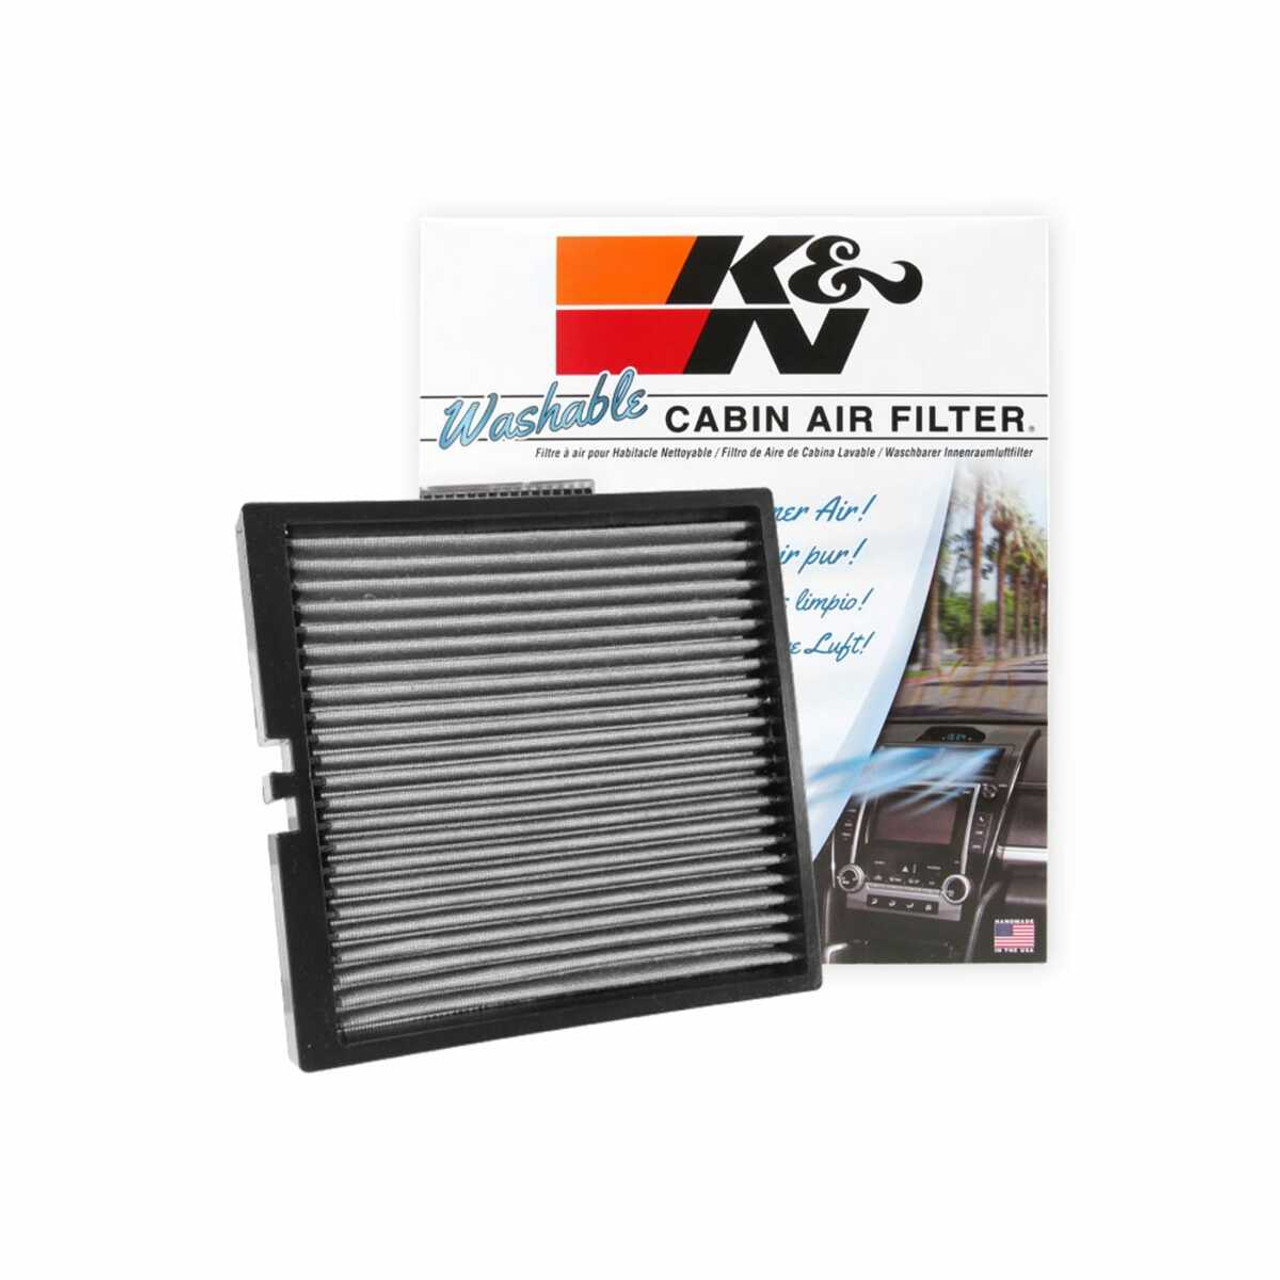 K&N VF2044 Cabin Air Filter For 14-18 Chevy Silverado GMC Sierra 1500 5.3L 6.2L